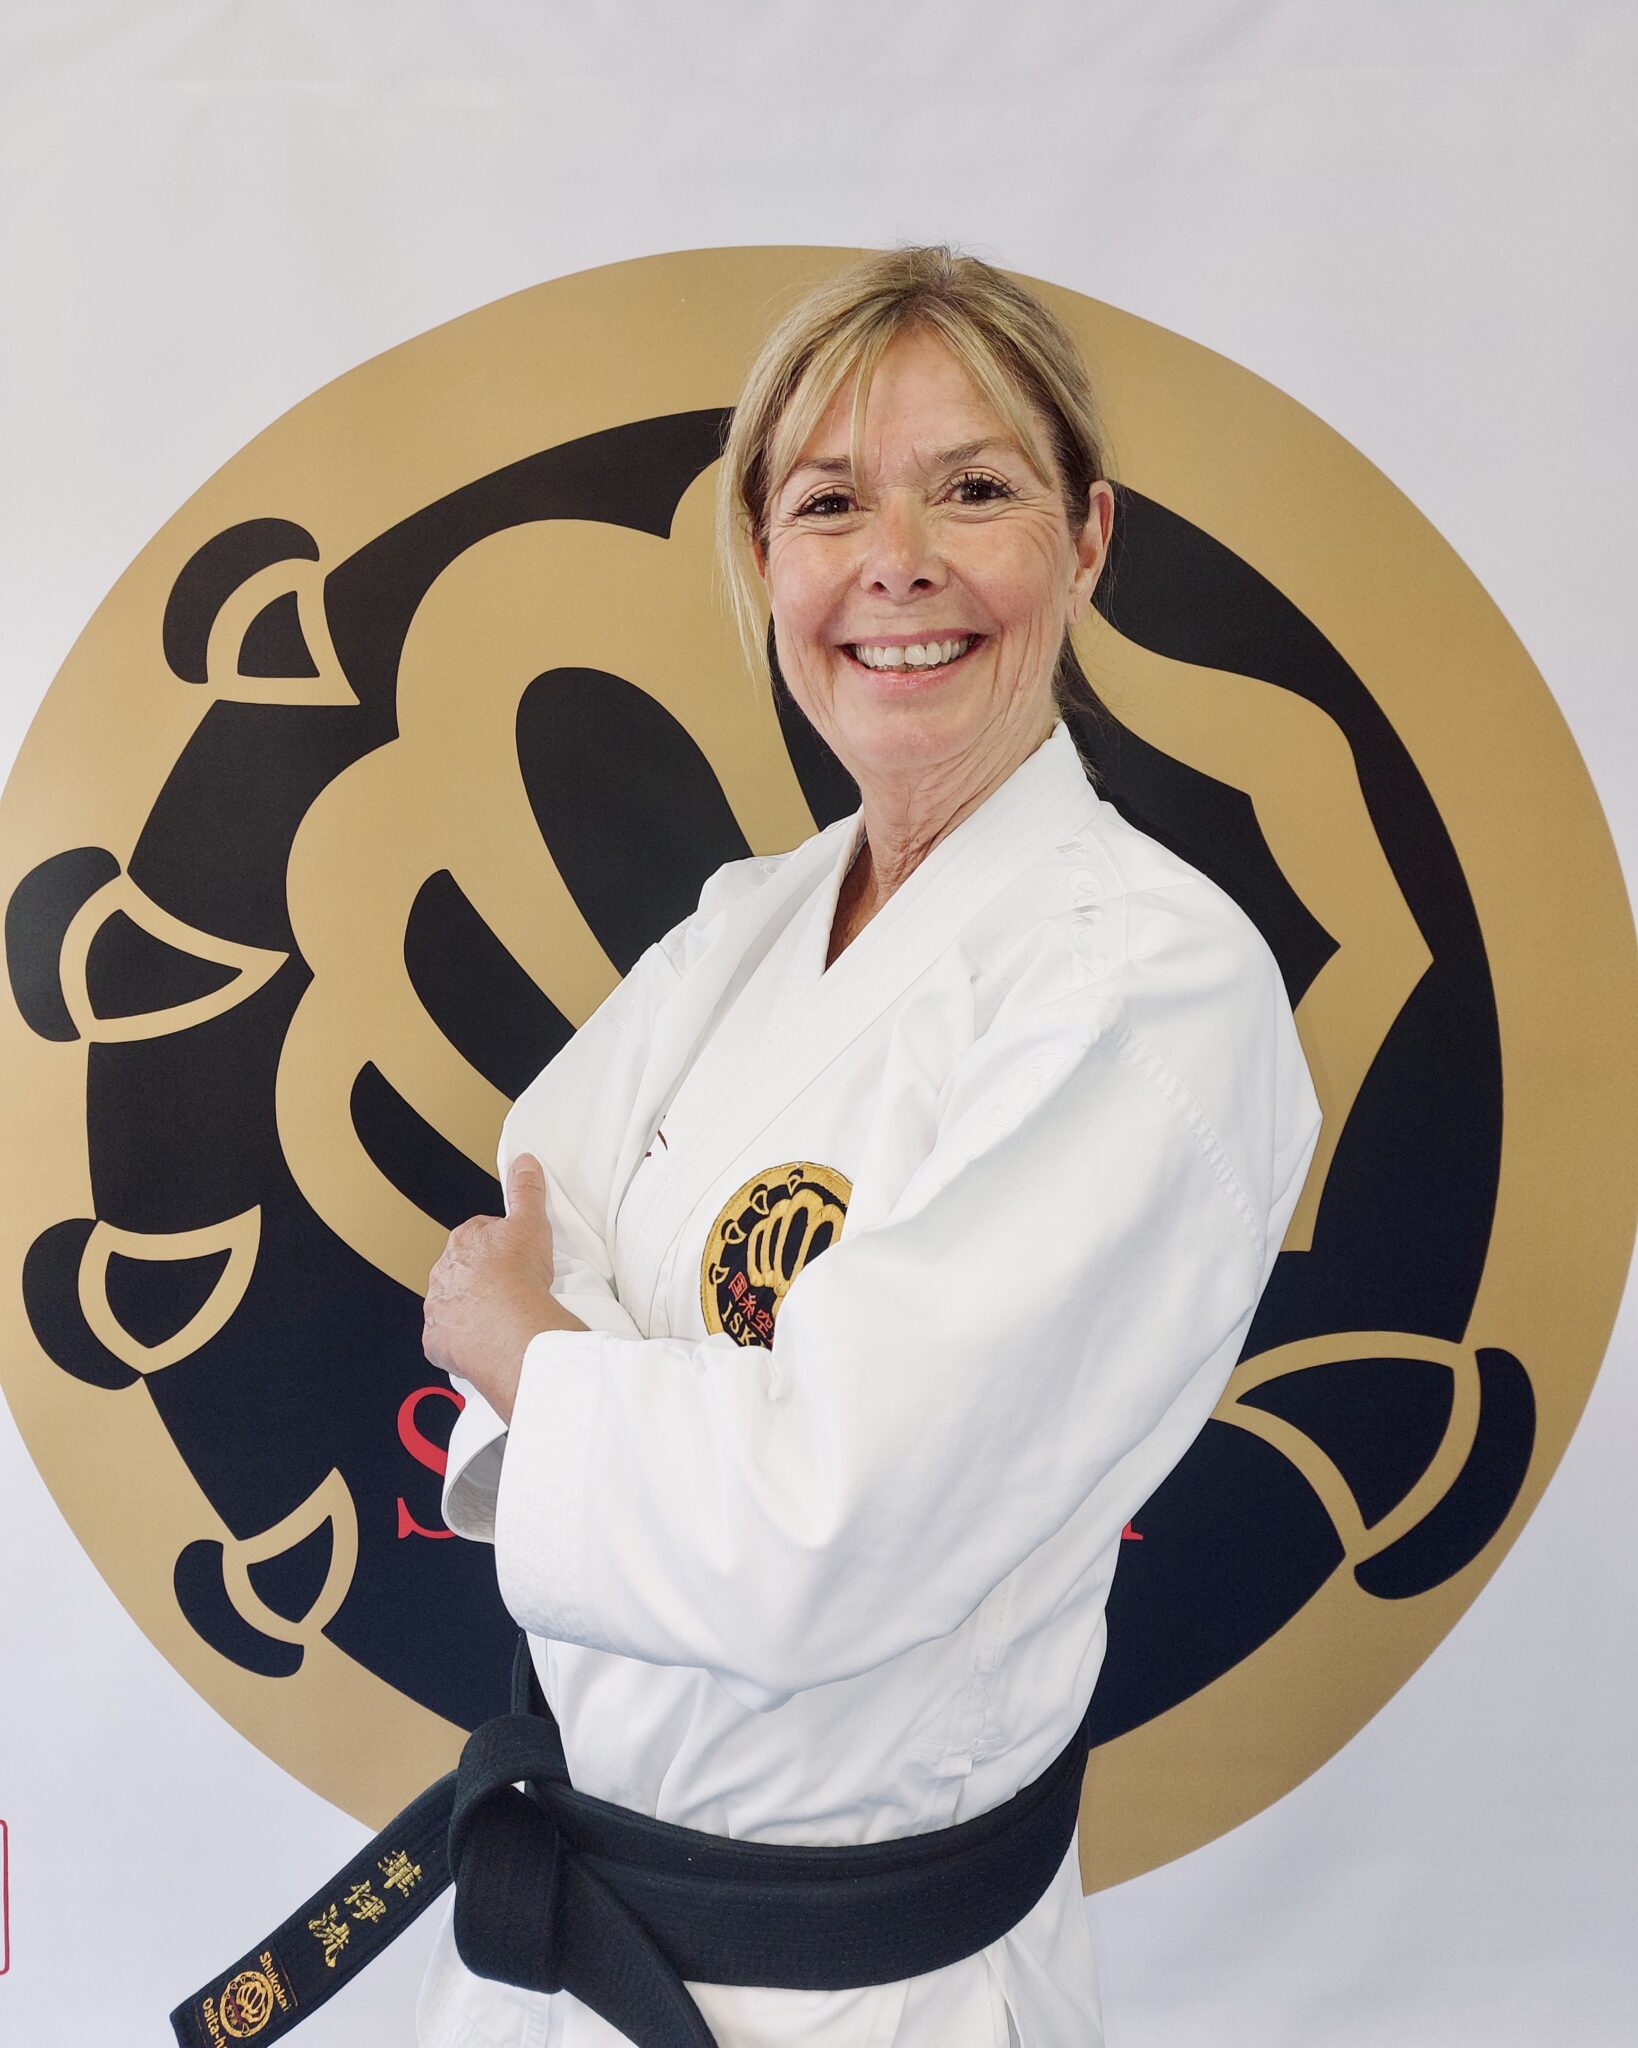 Gayle Berry-Zöchbauer, 6. Dan Shito-ryu Karatedo